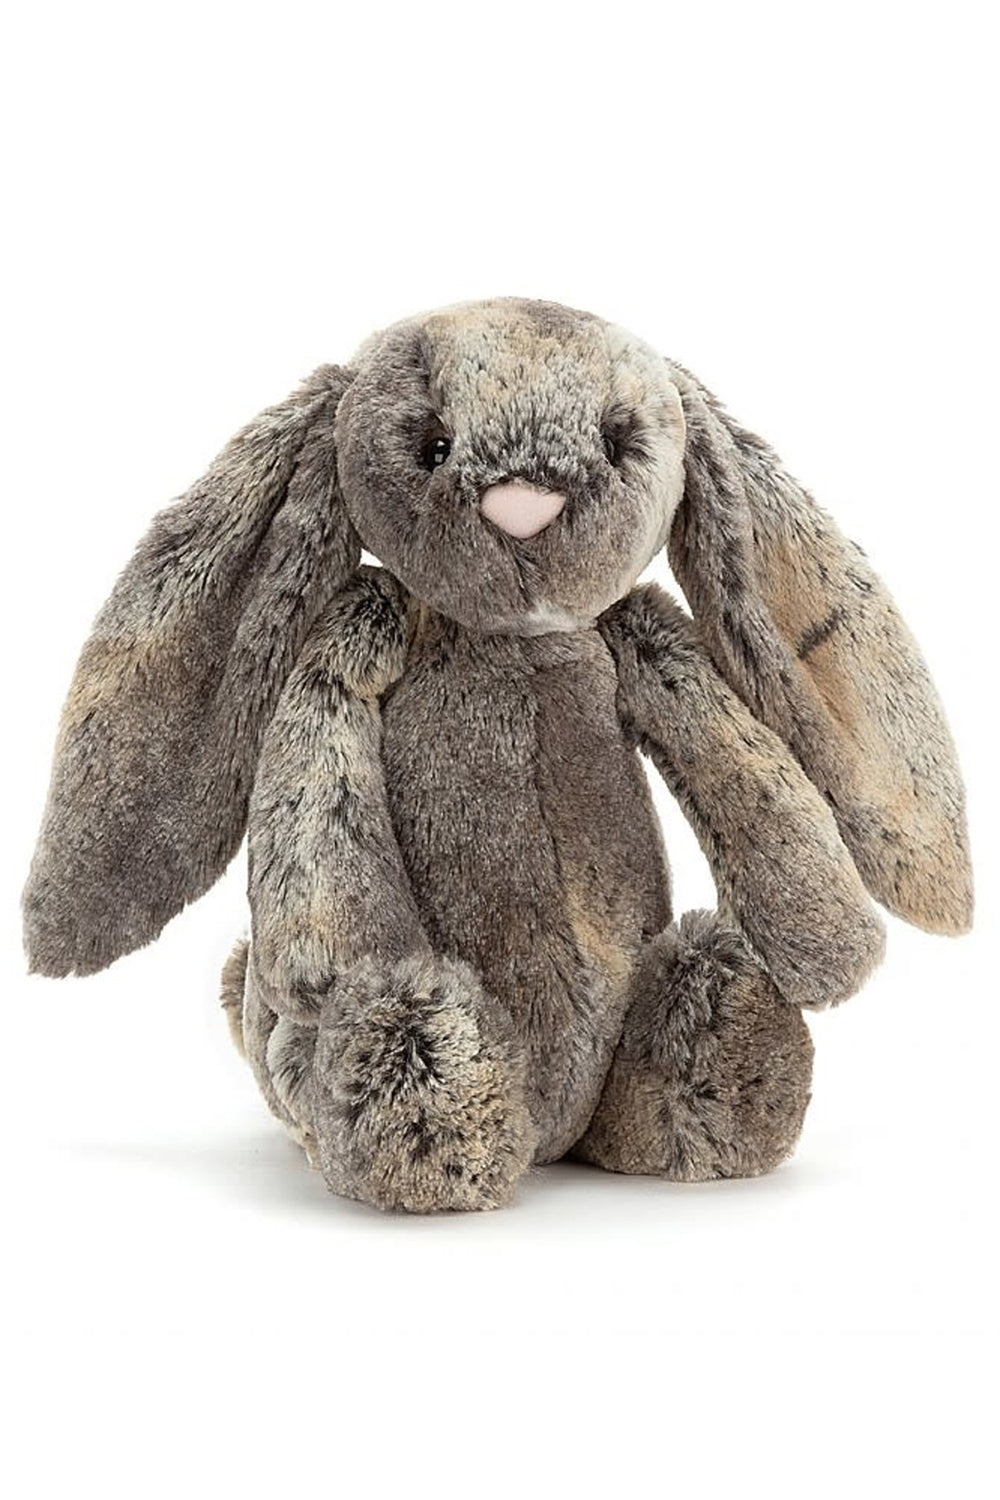 JELLYCAT Bashful Bunny - Woodland